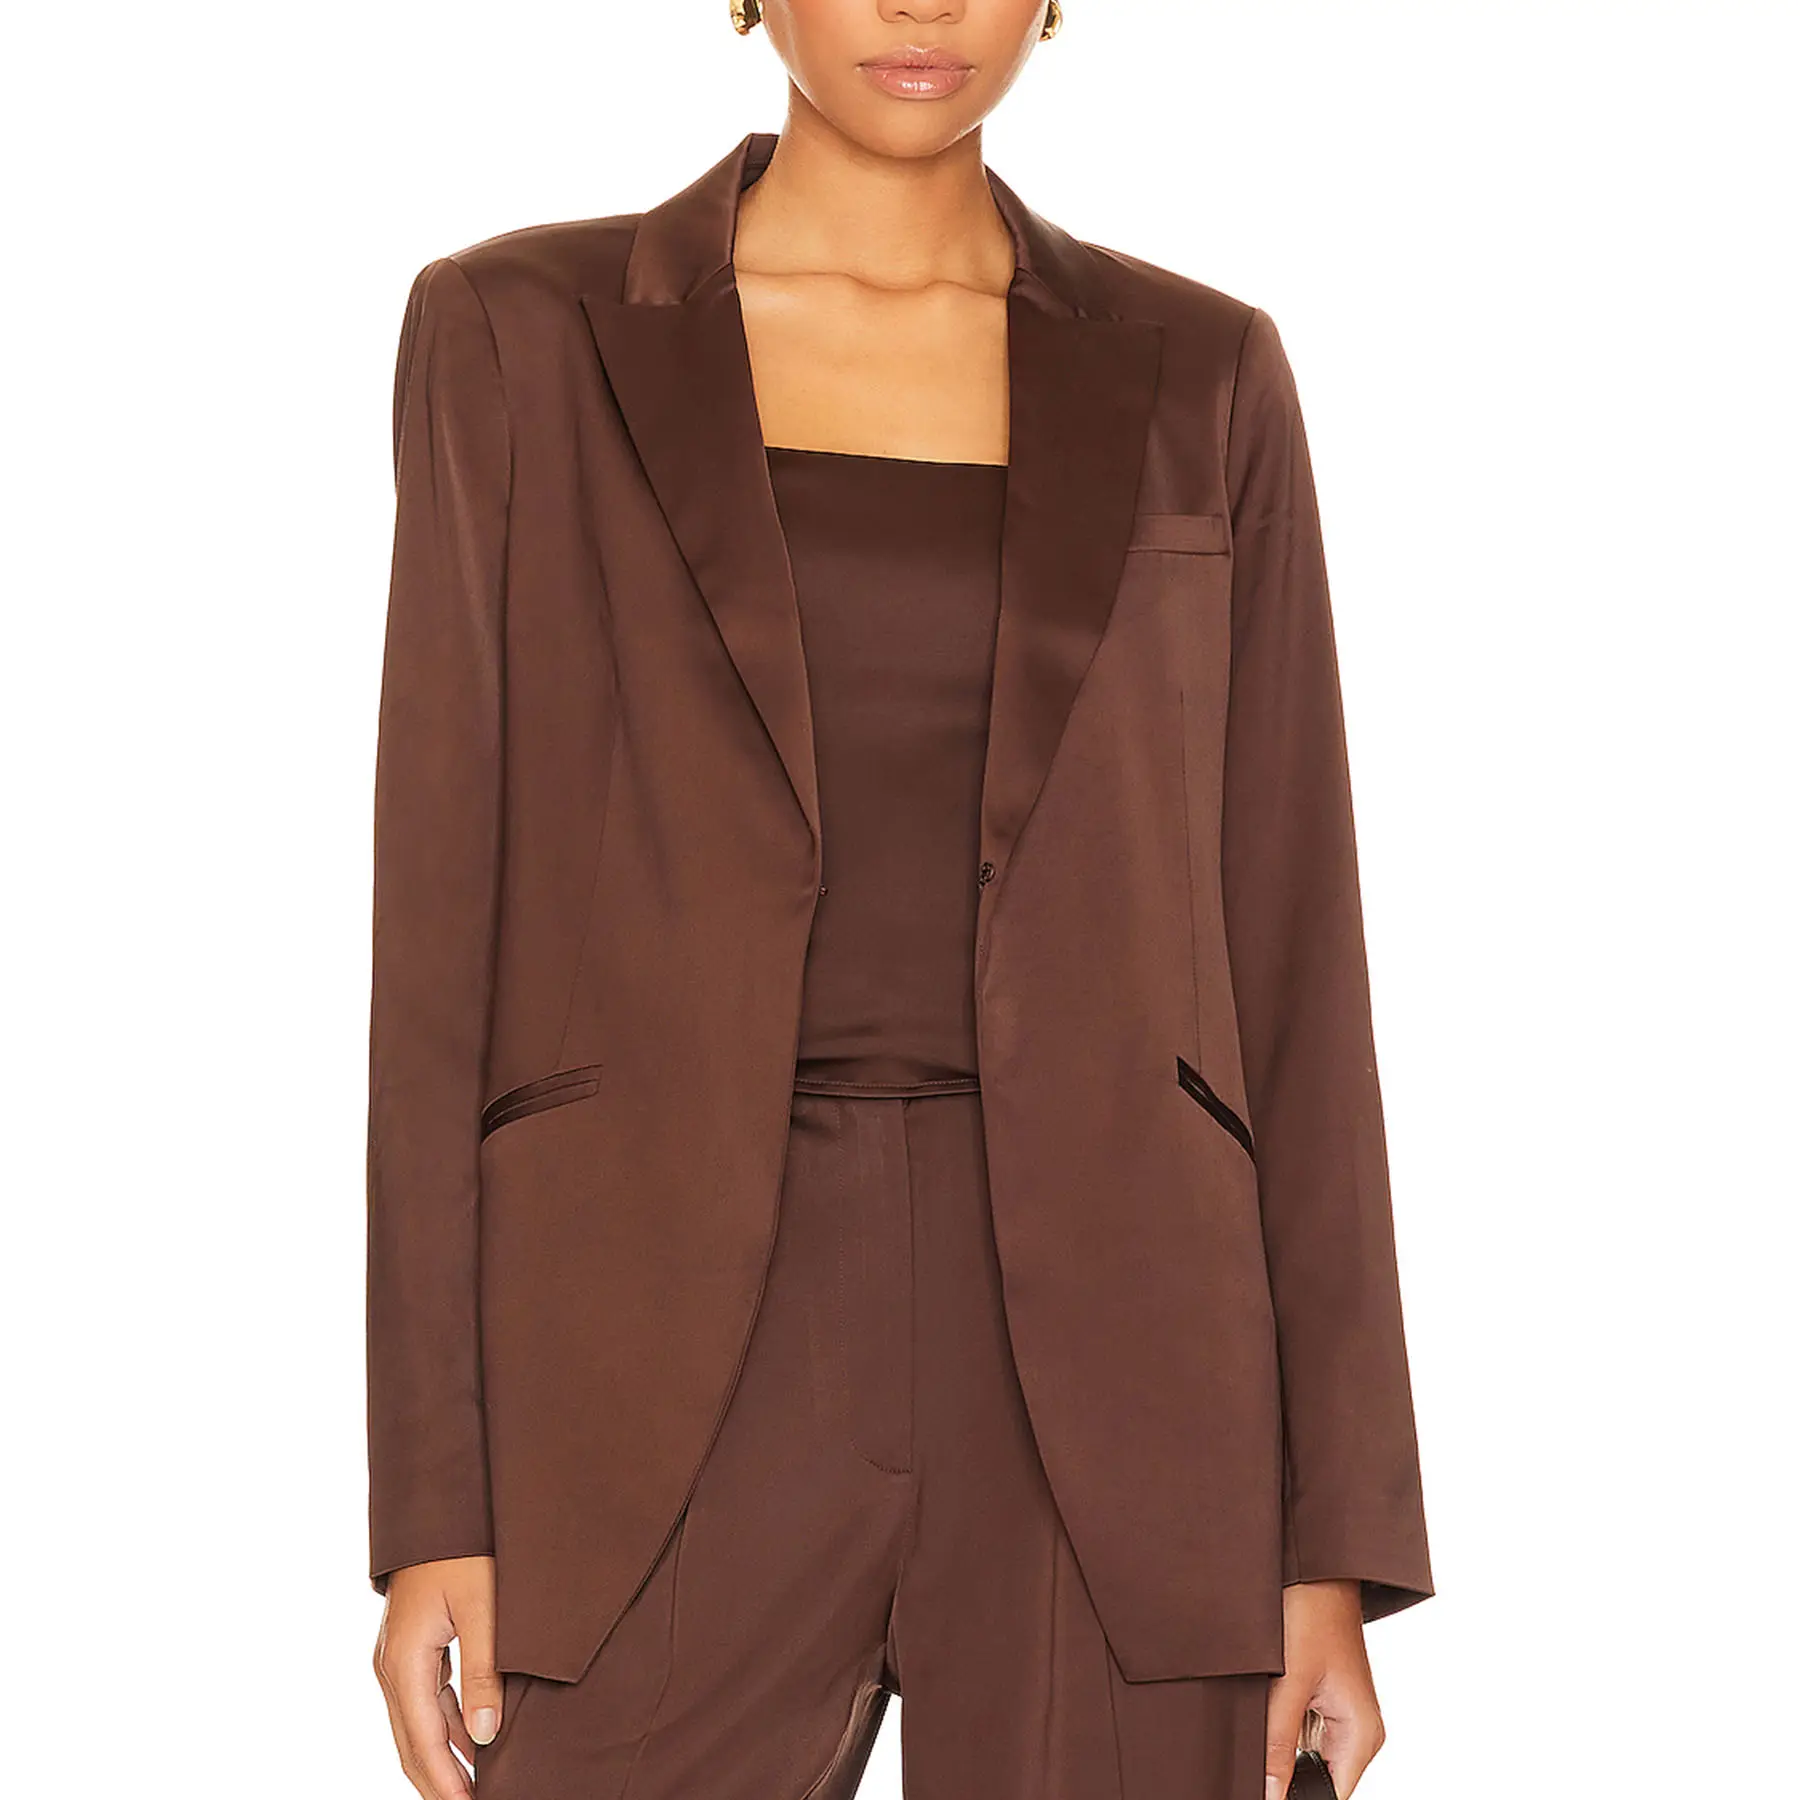 2023 Outono magro simples elegante tecido sedoso estilo terno casaco estilo solto alta qualidade pode ser personalizado